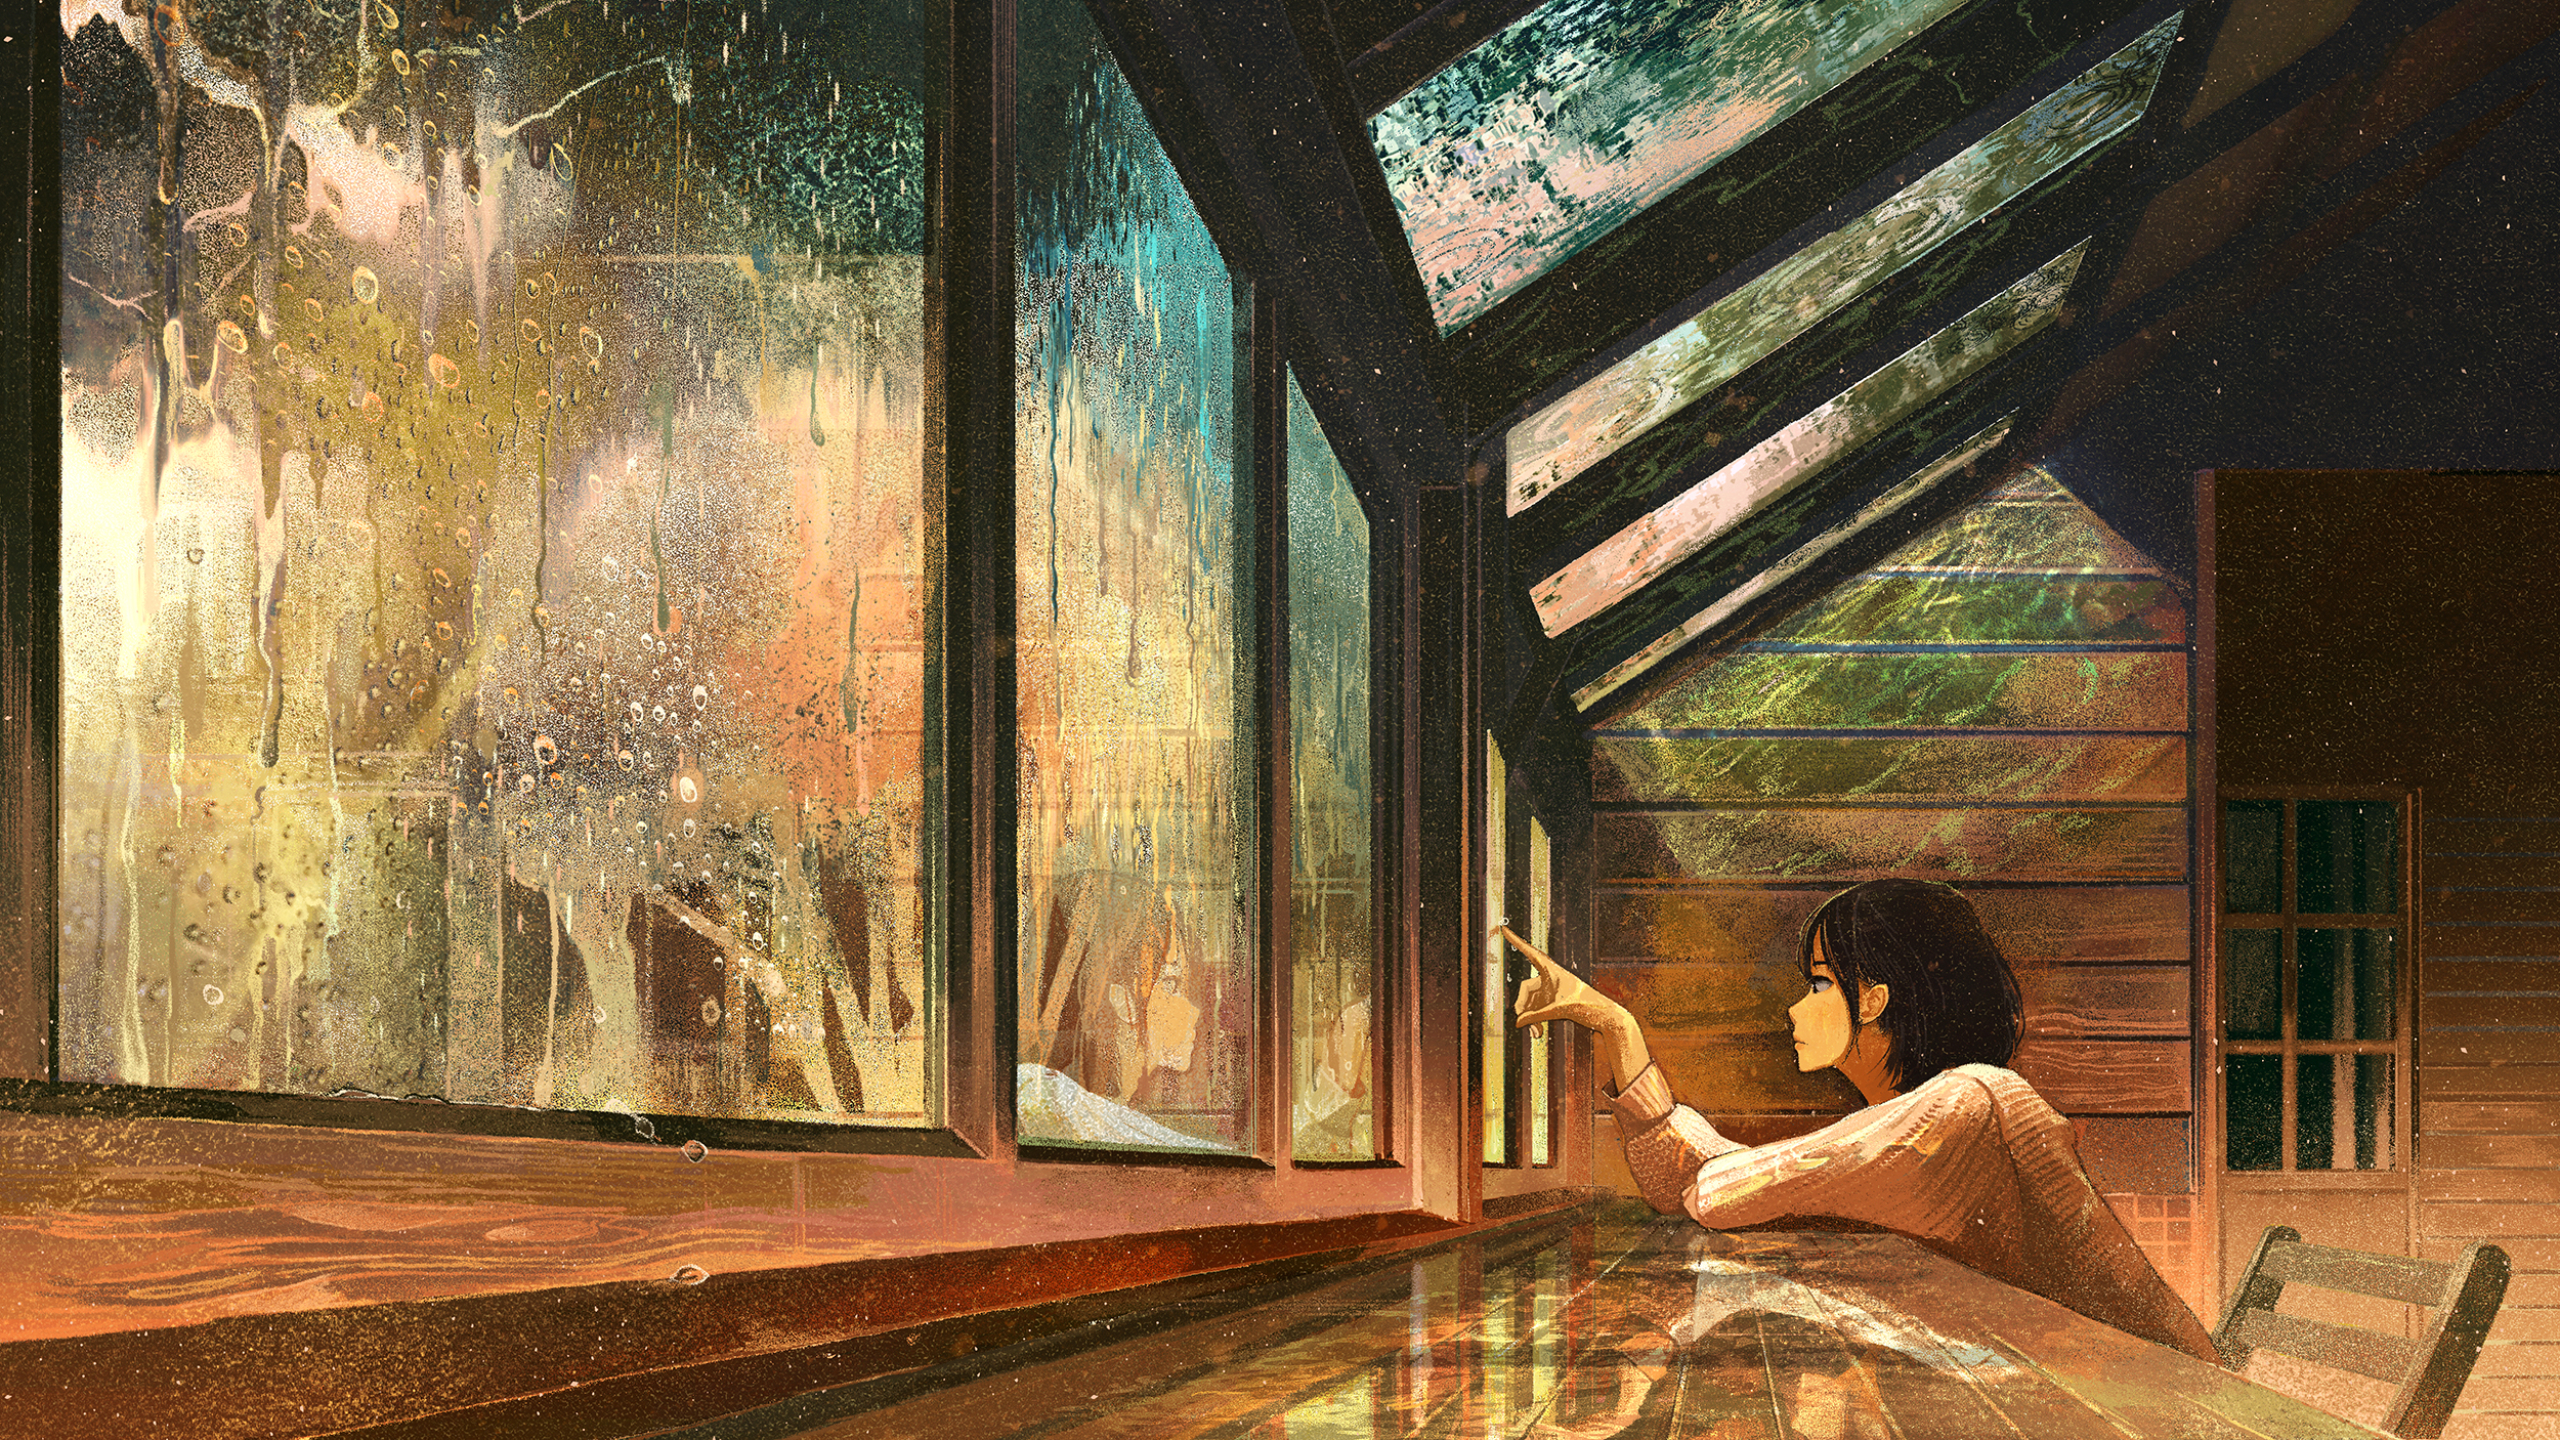 Anime Anime Girls Digital Art Artwork 2D Portrait Rain Water On Glass Rest Calm 2560x1440